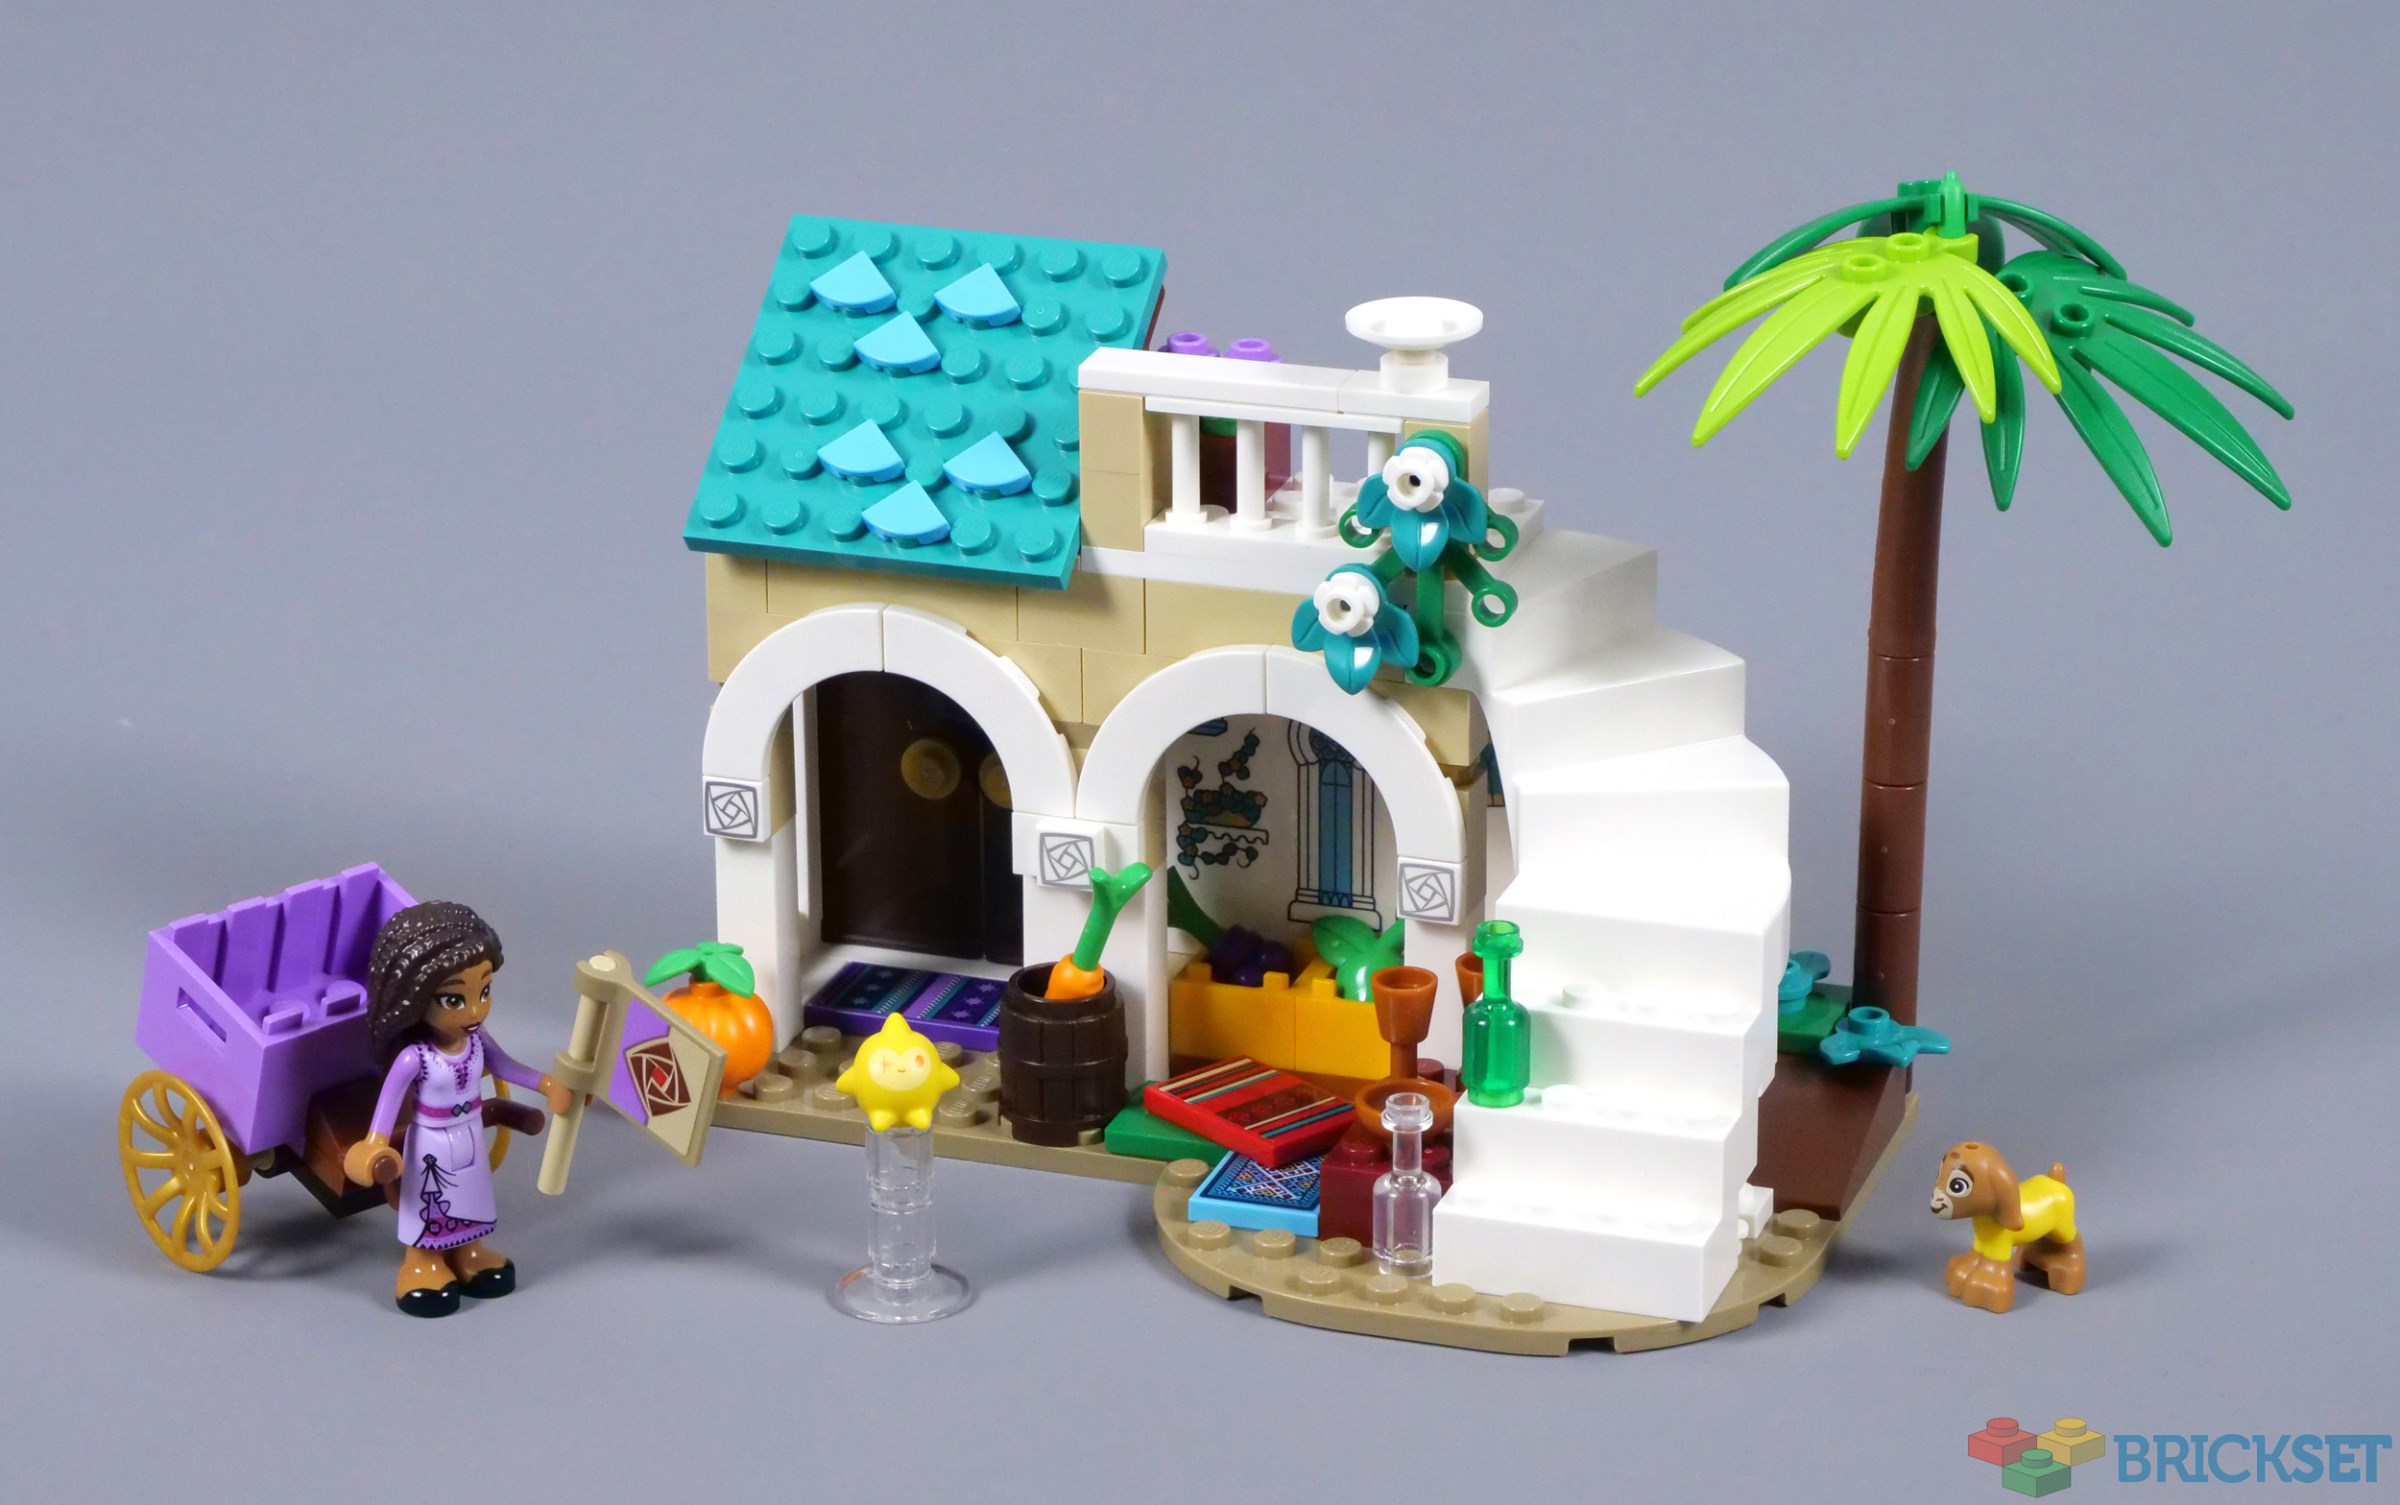 LEGO® Disney Princess Wish Asha in the City of Rosas 154 Piece Buildin